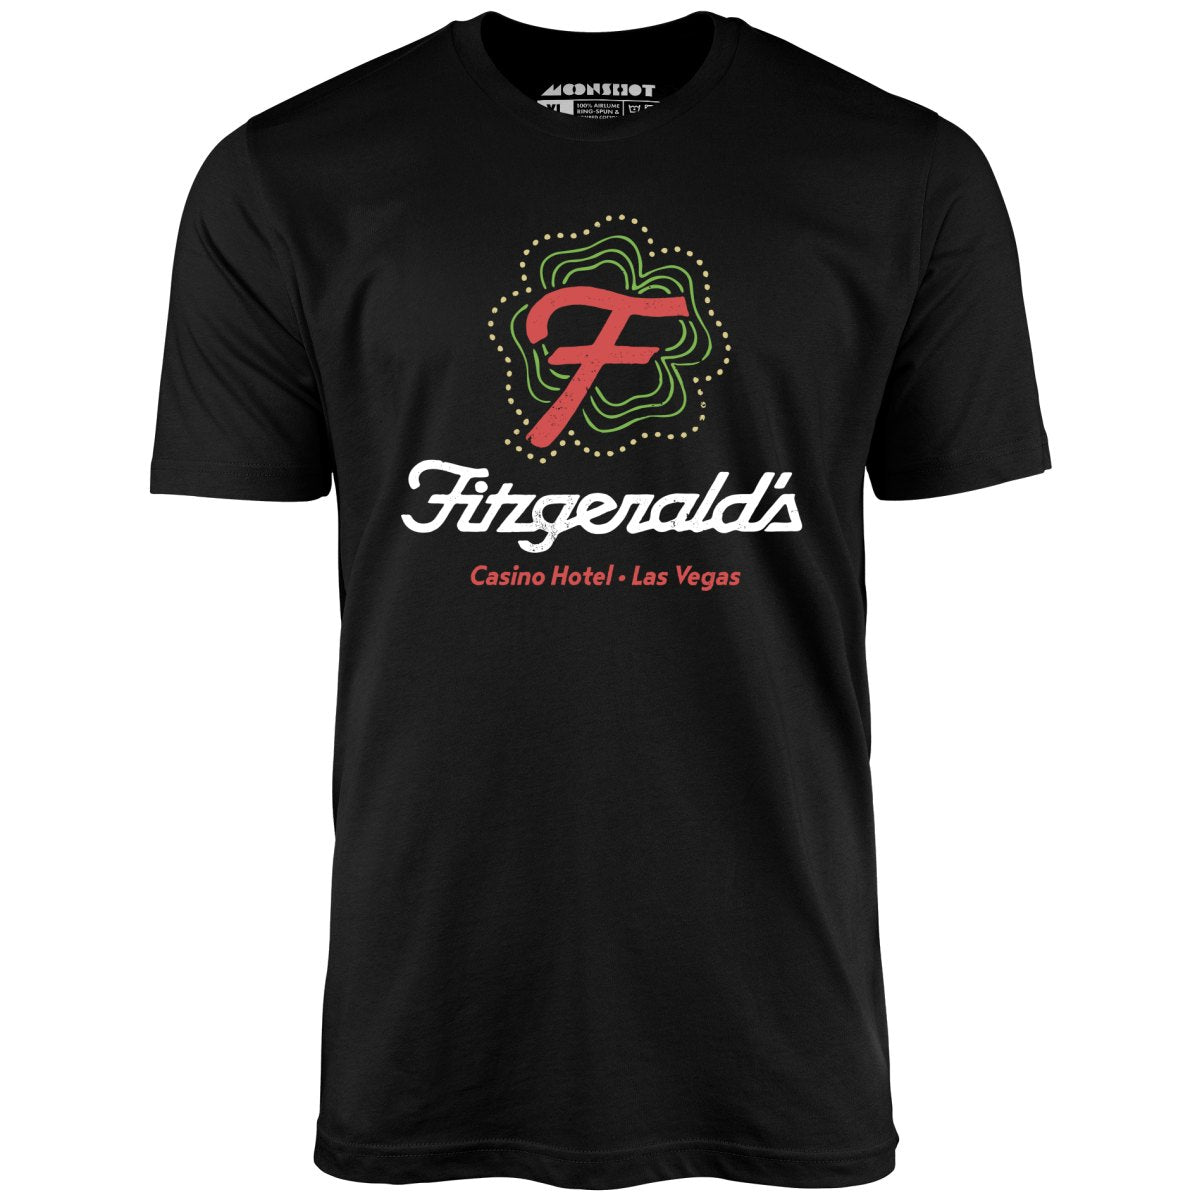 Fitzgerald's Hotel and Casino - Vintage Las Vegas - Unisex T-Shirt